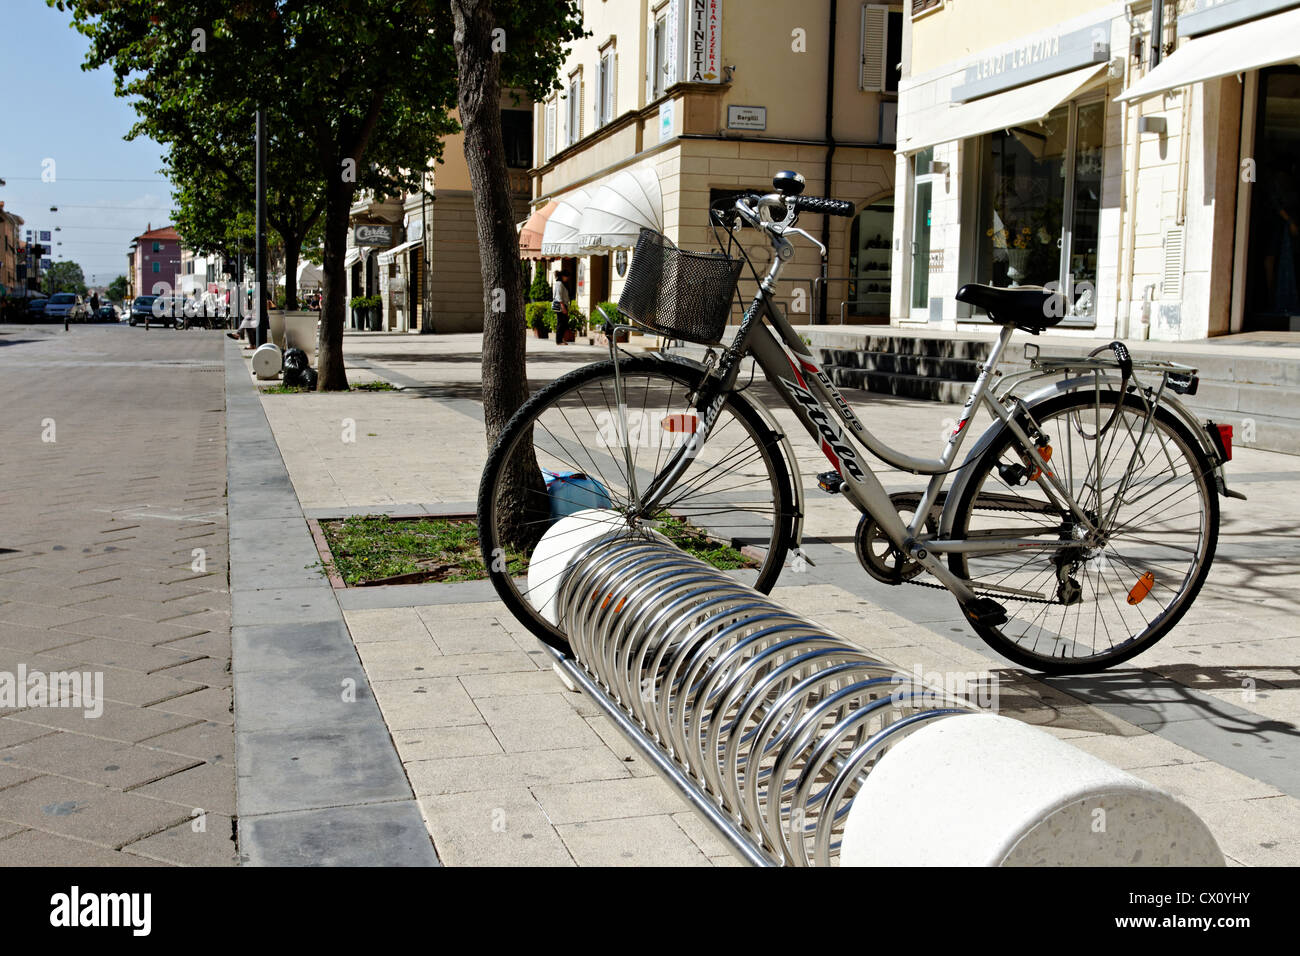 Mesdames location de vélo sur la rue Main, Cecina Toscane Italie Banque D'Images